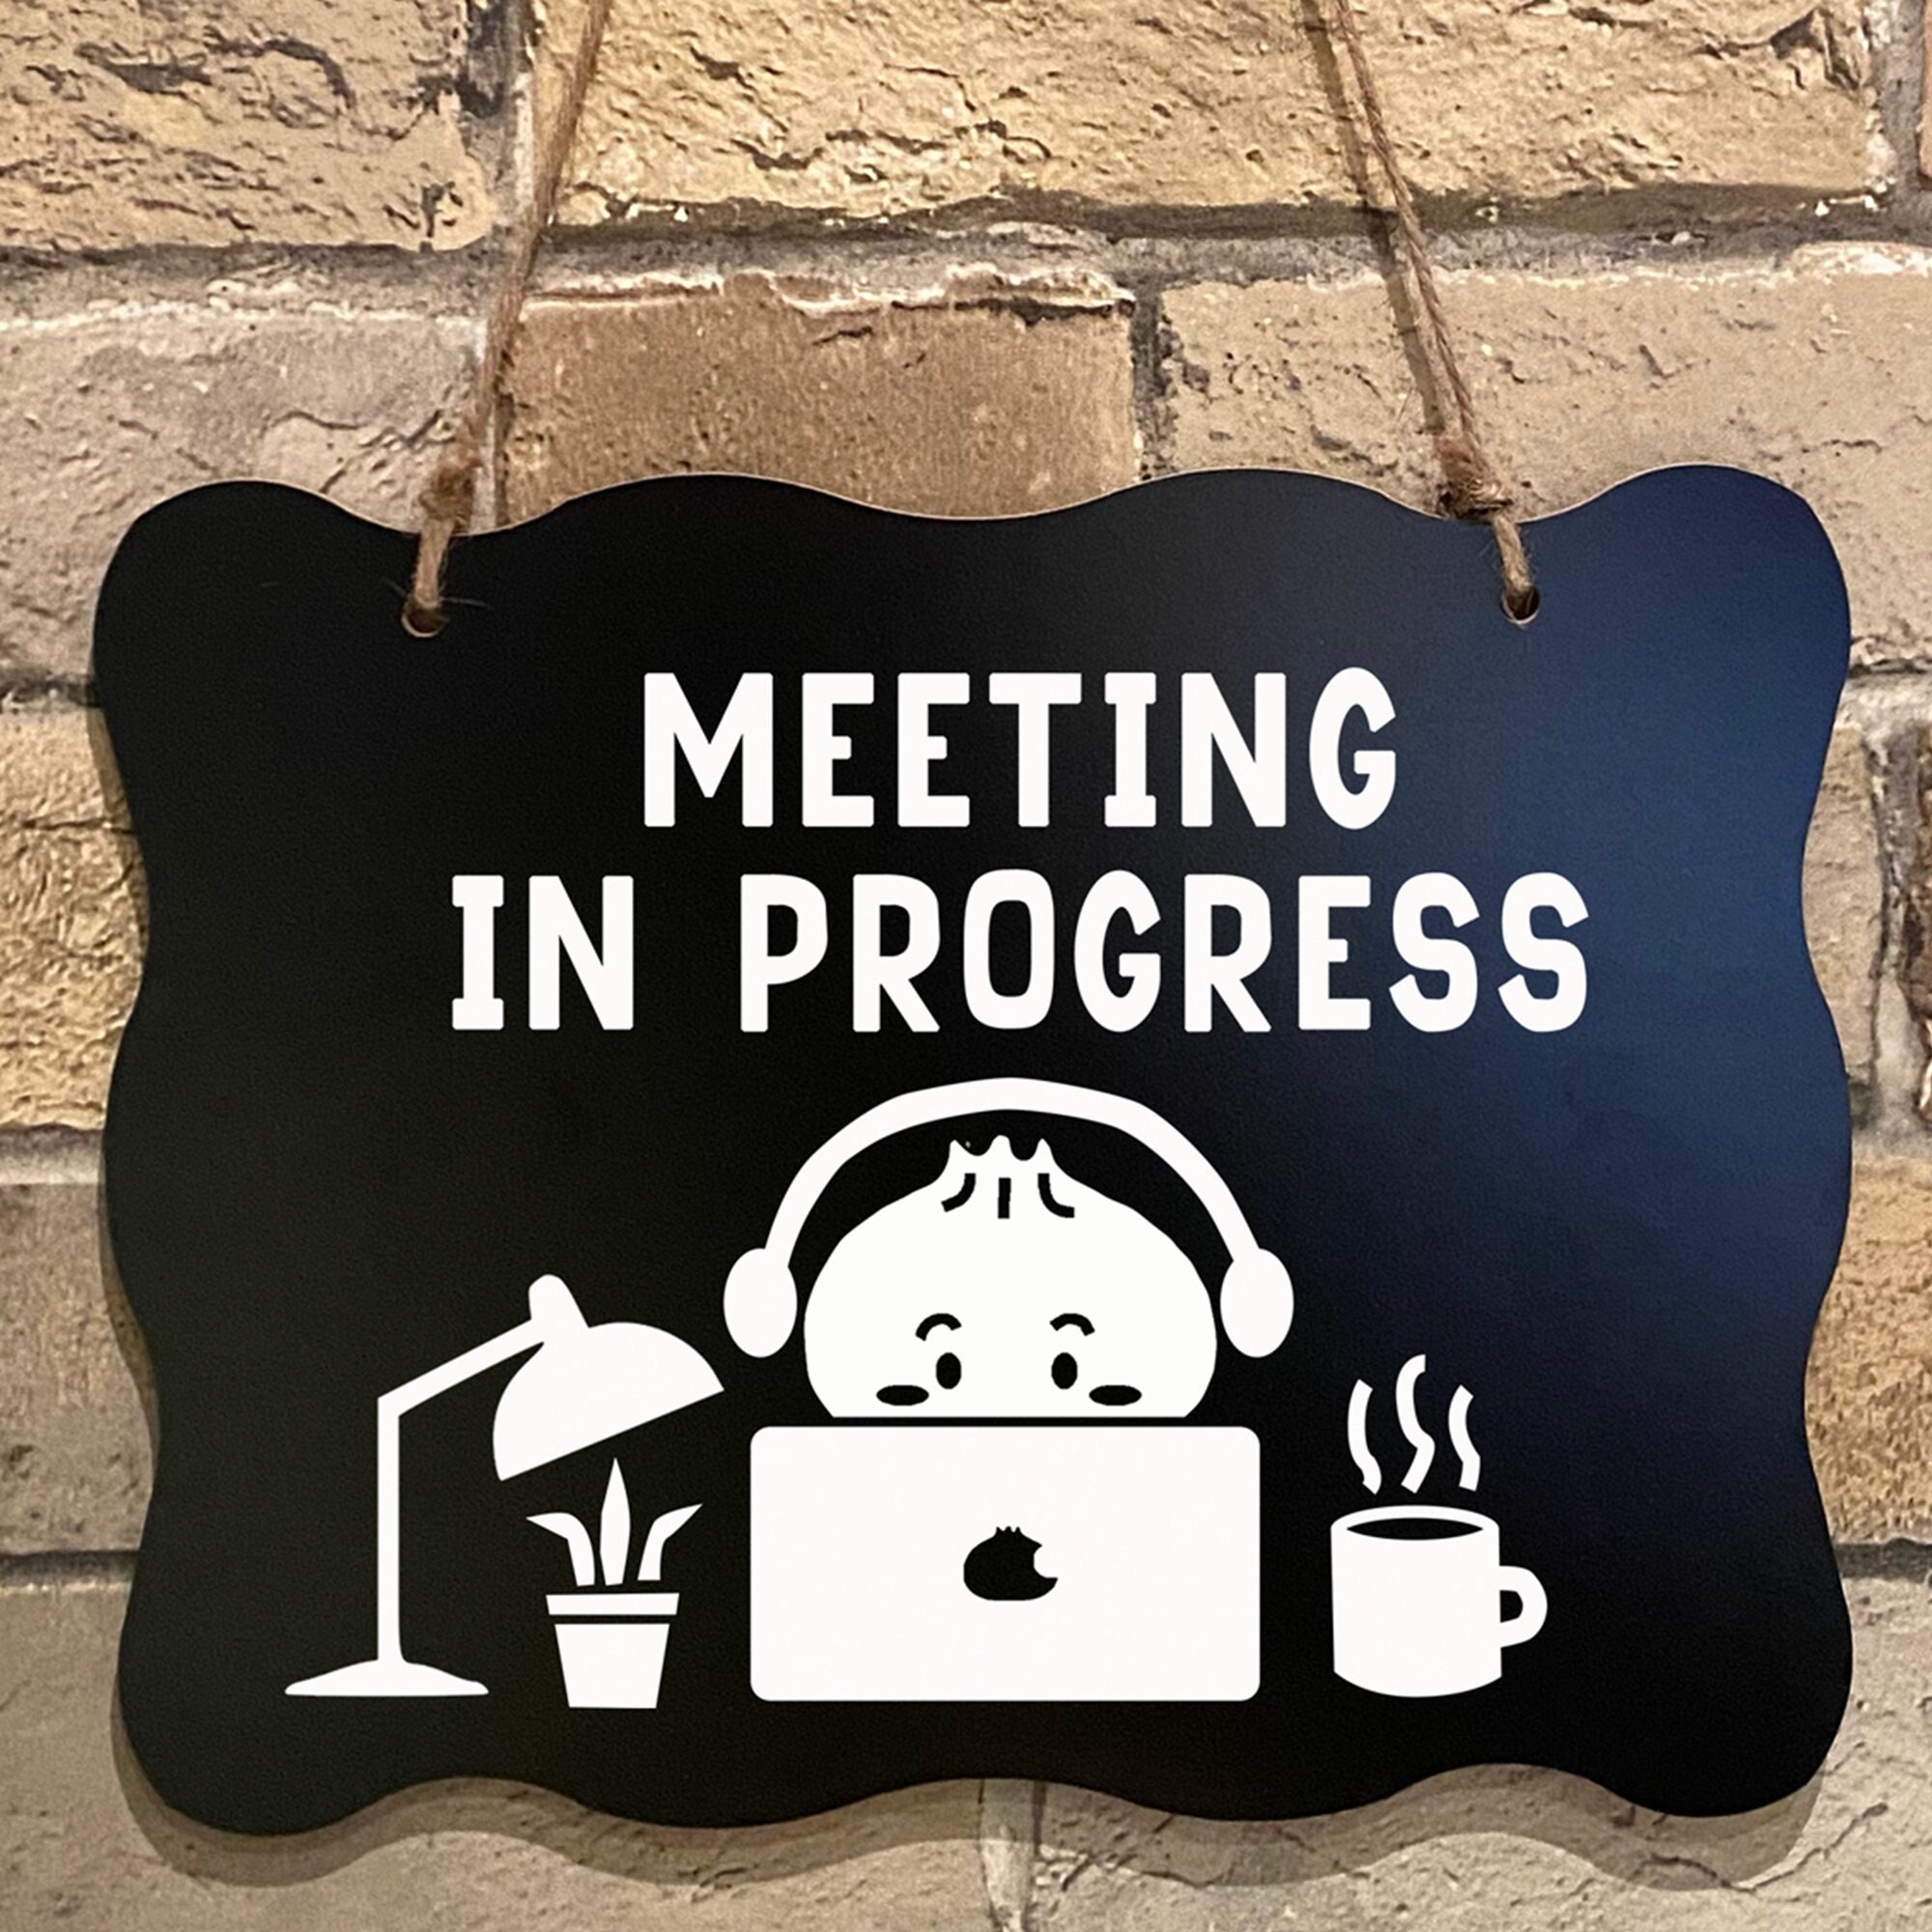 Meeting in Progress Bitte nicht stören Schild Zoom Meeting | Etsy